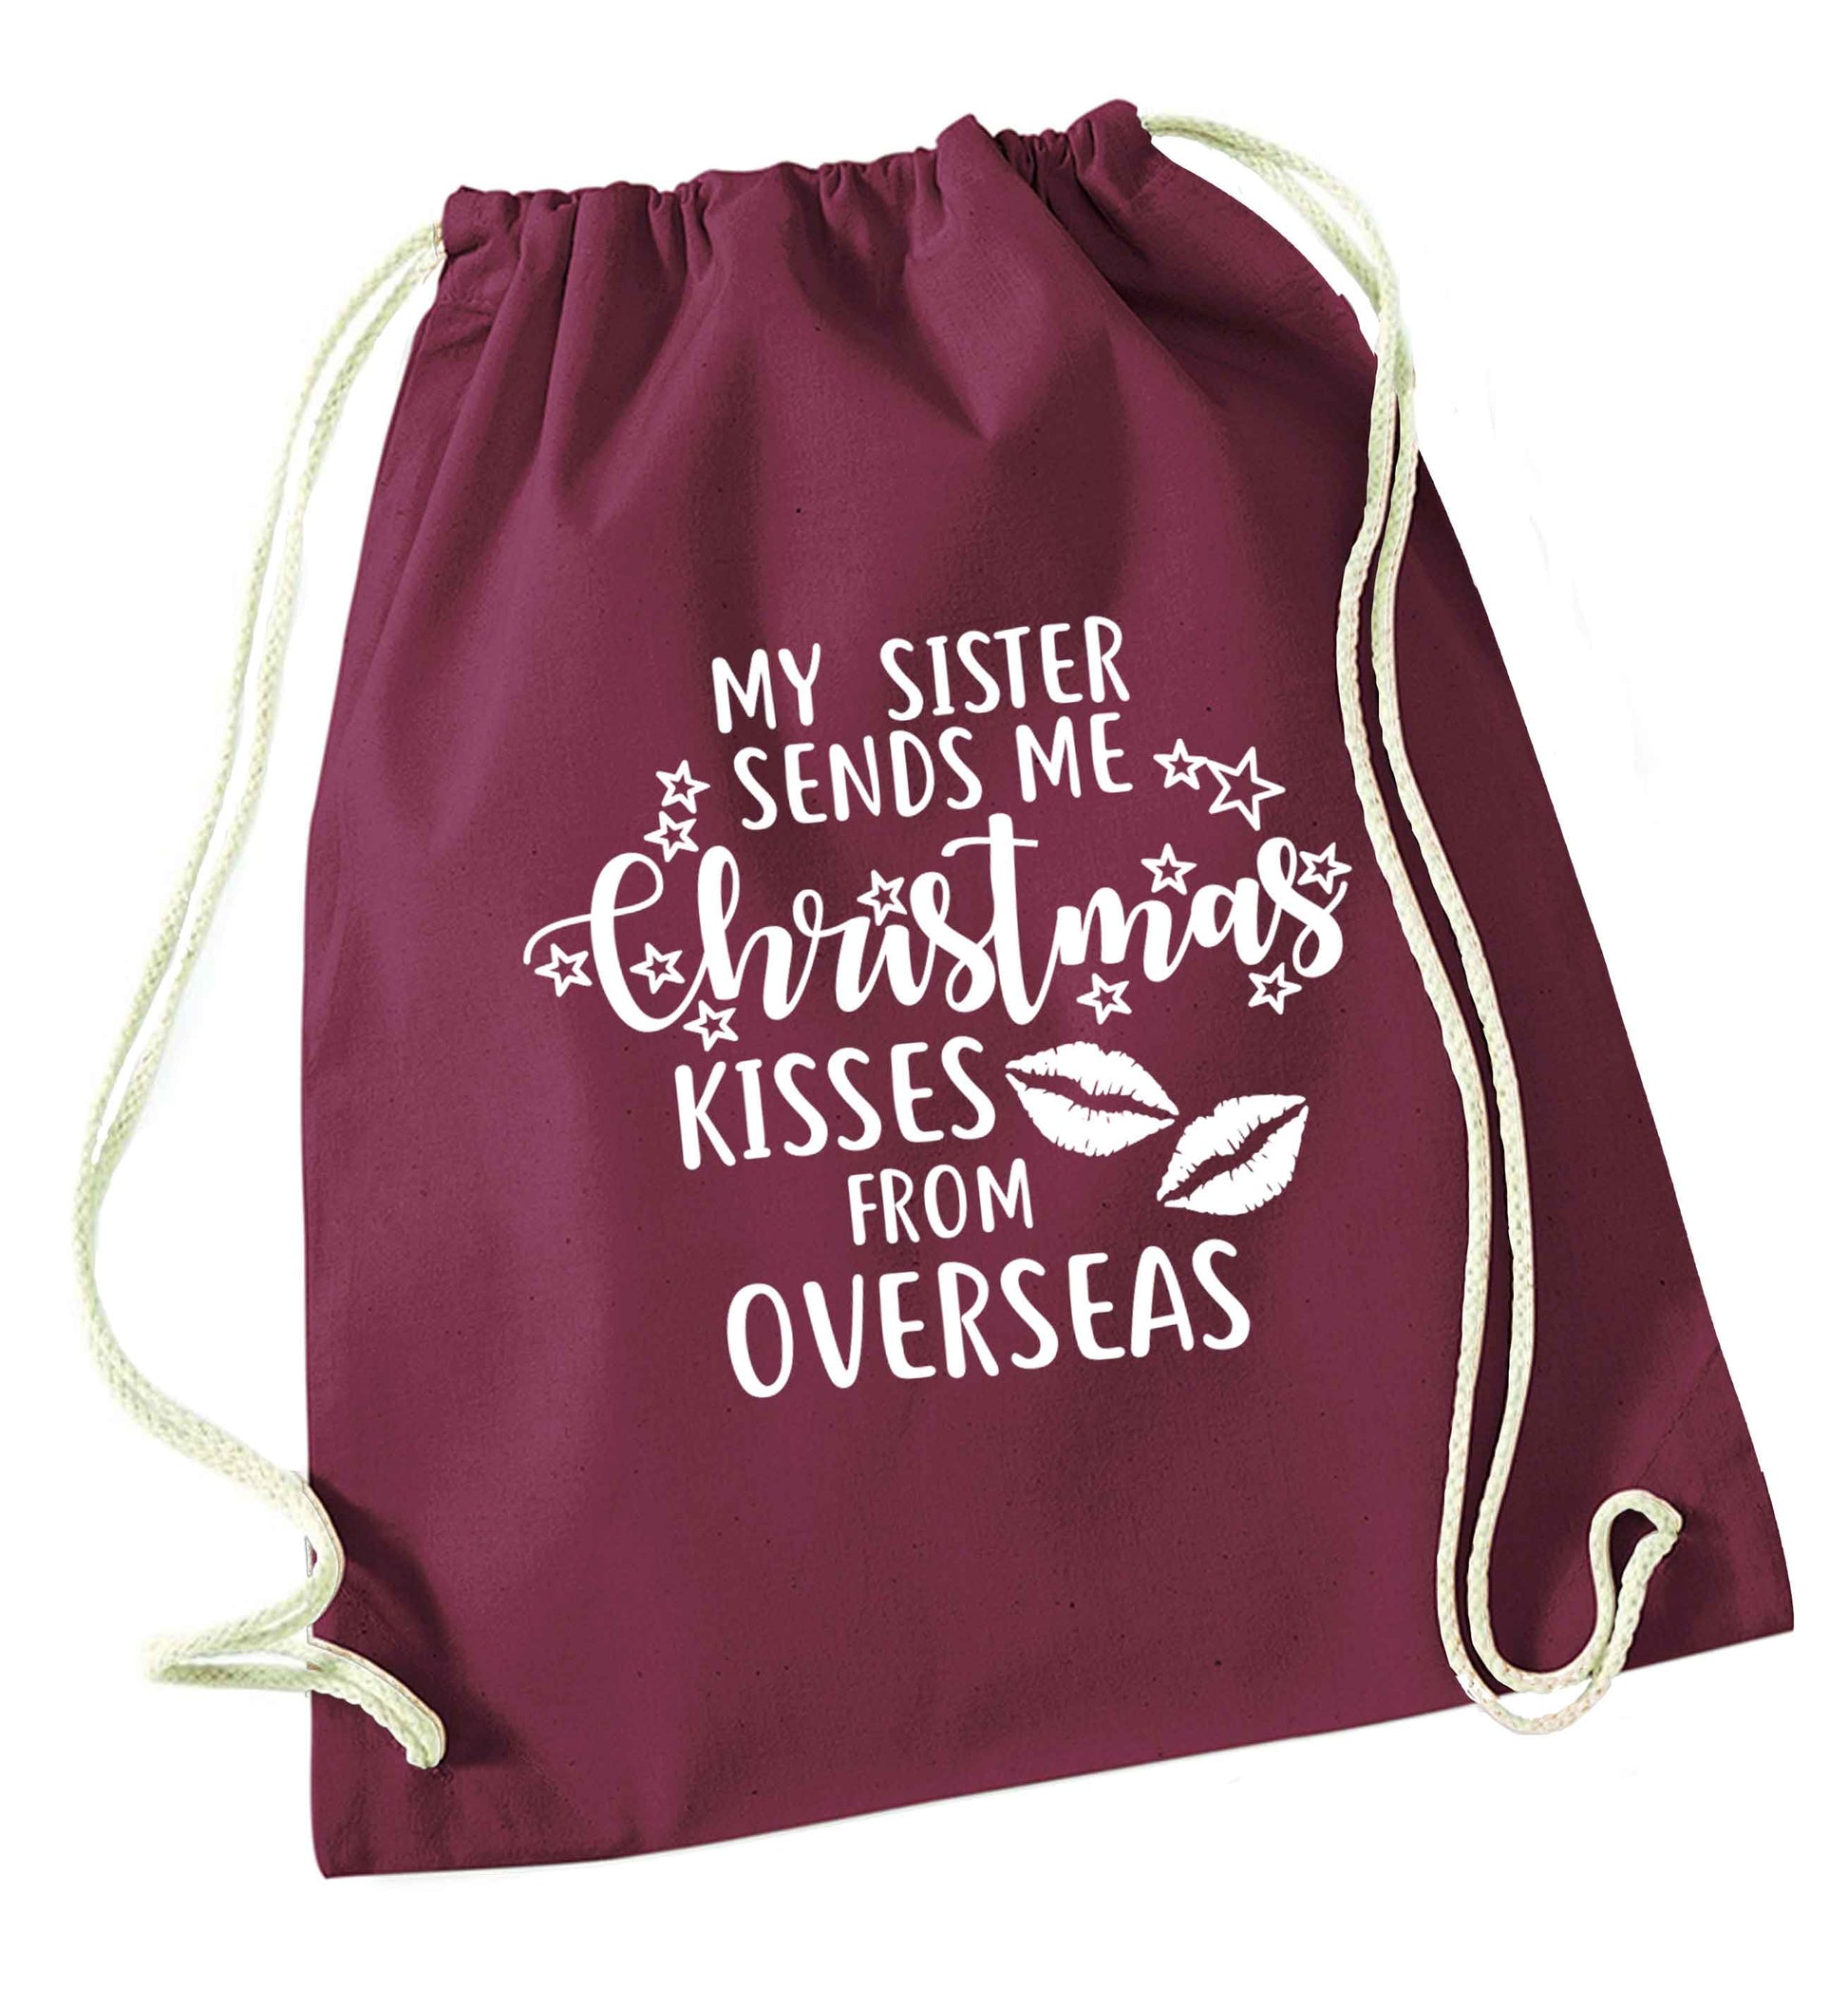 Grandad Christmas Kisses Overseas maroon drawstring bag